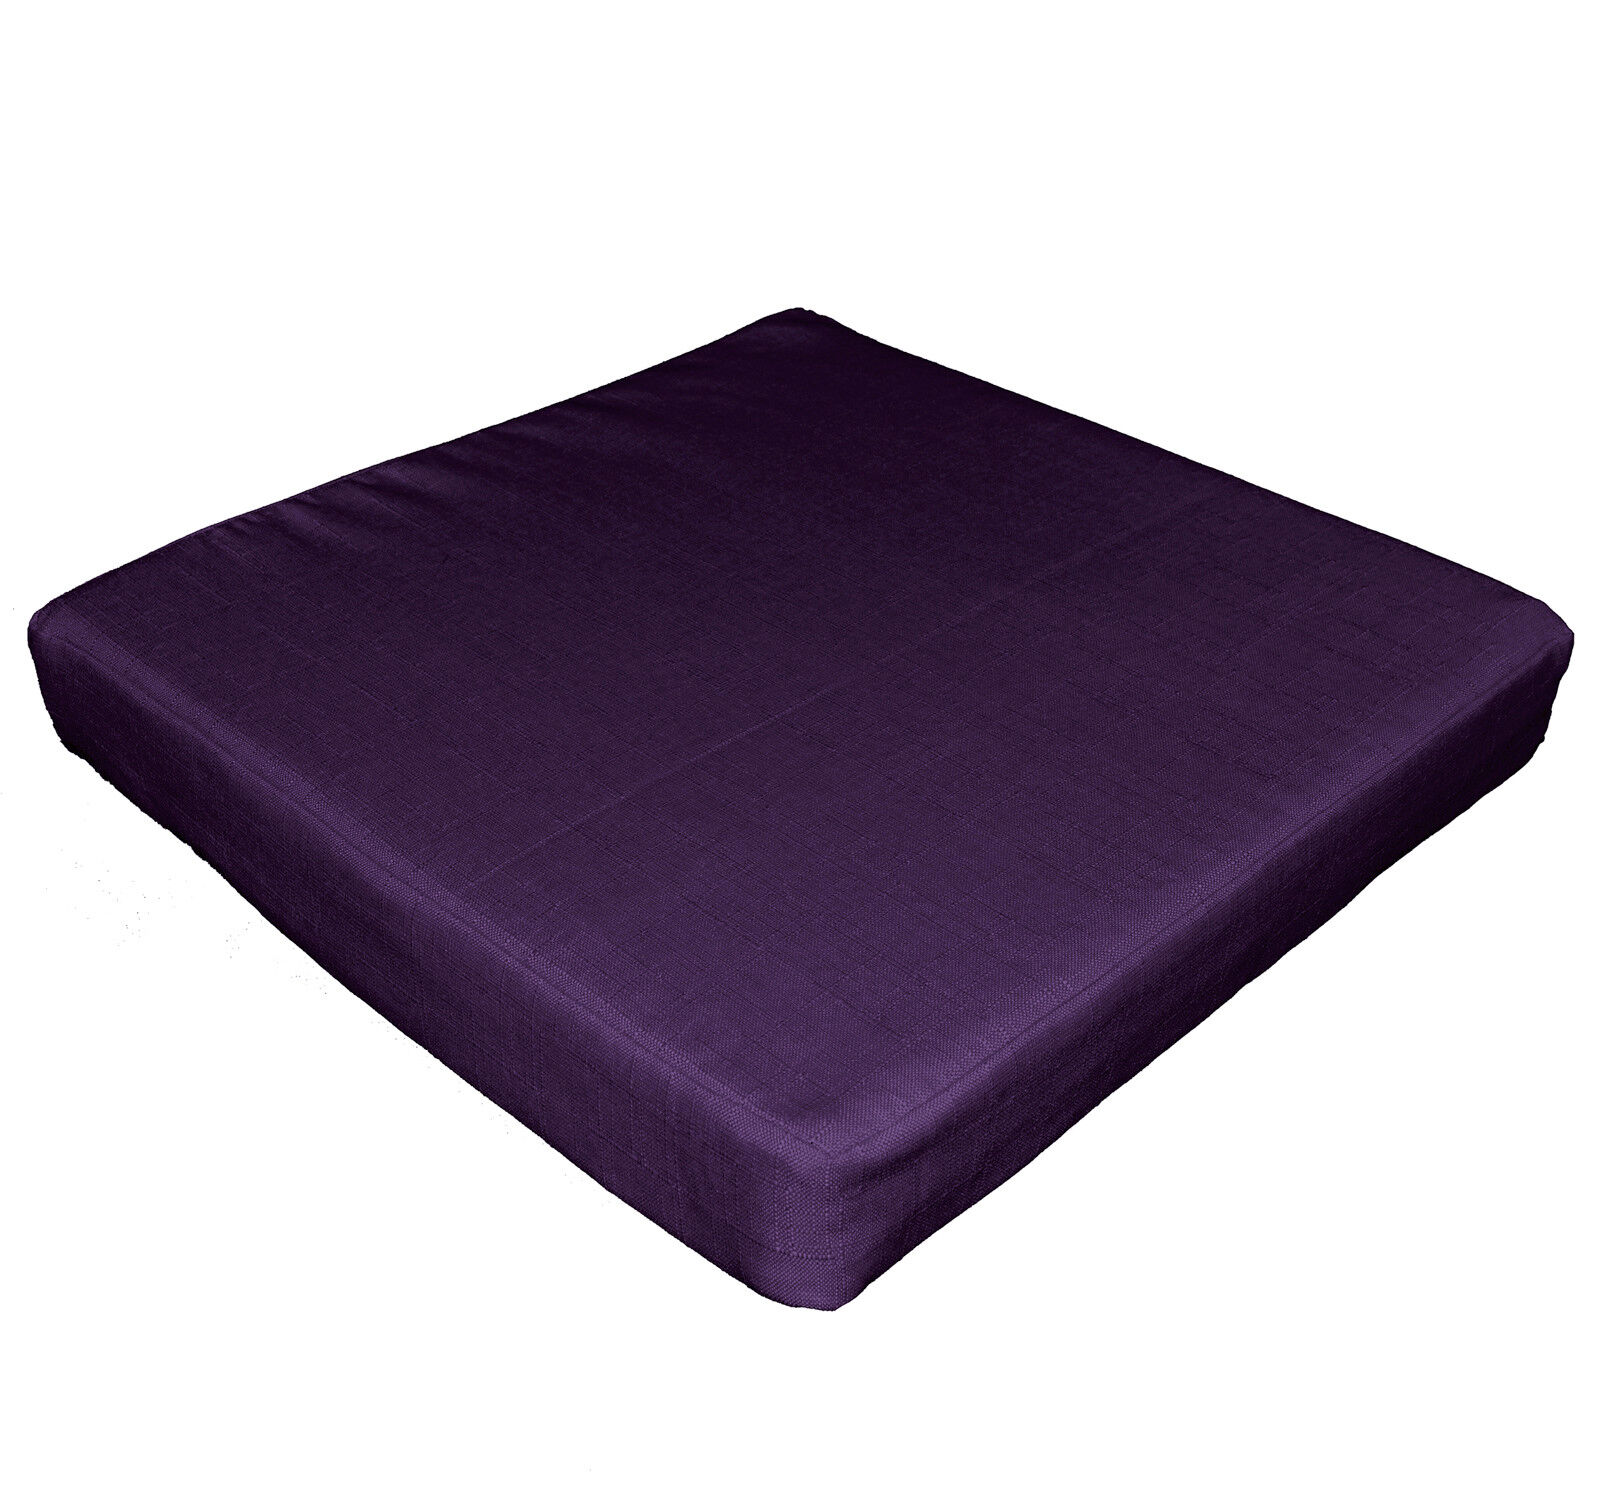 Qh01t Dark Purple Thick Cotton Blend 3D Box Sofa Seat Cushion Cover*Custom Size* Wyprzedażowa obniżka